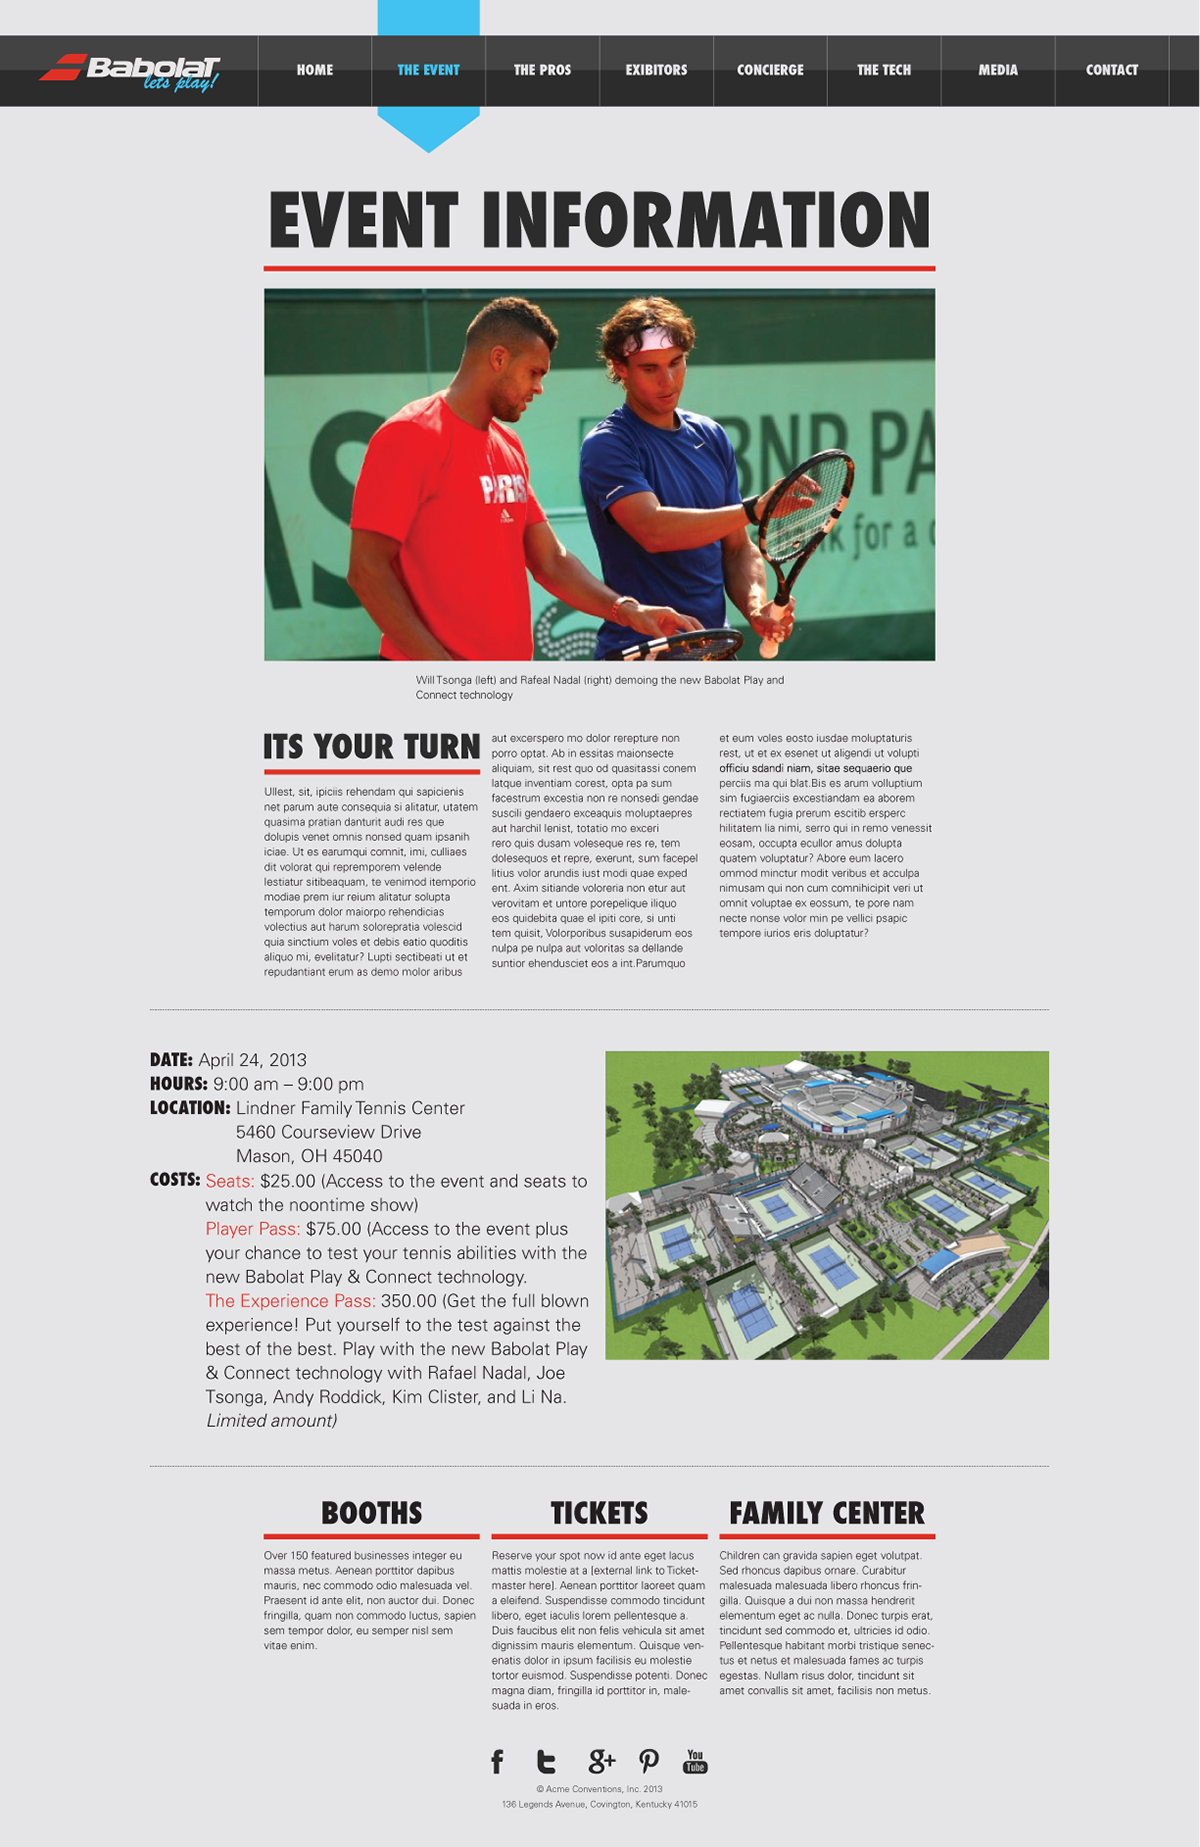 tennis babolat Responsive HTML css sports cincinnati Event atheletes Website mobile tablet